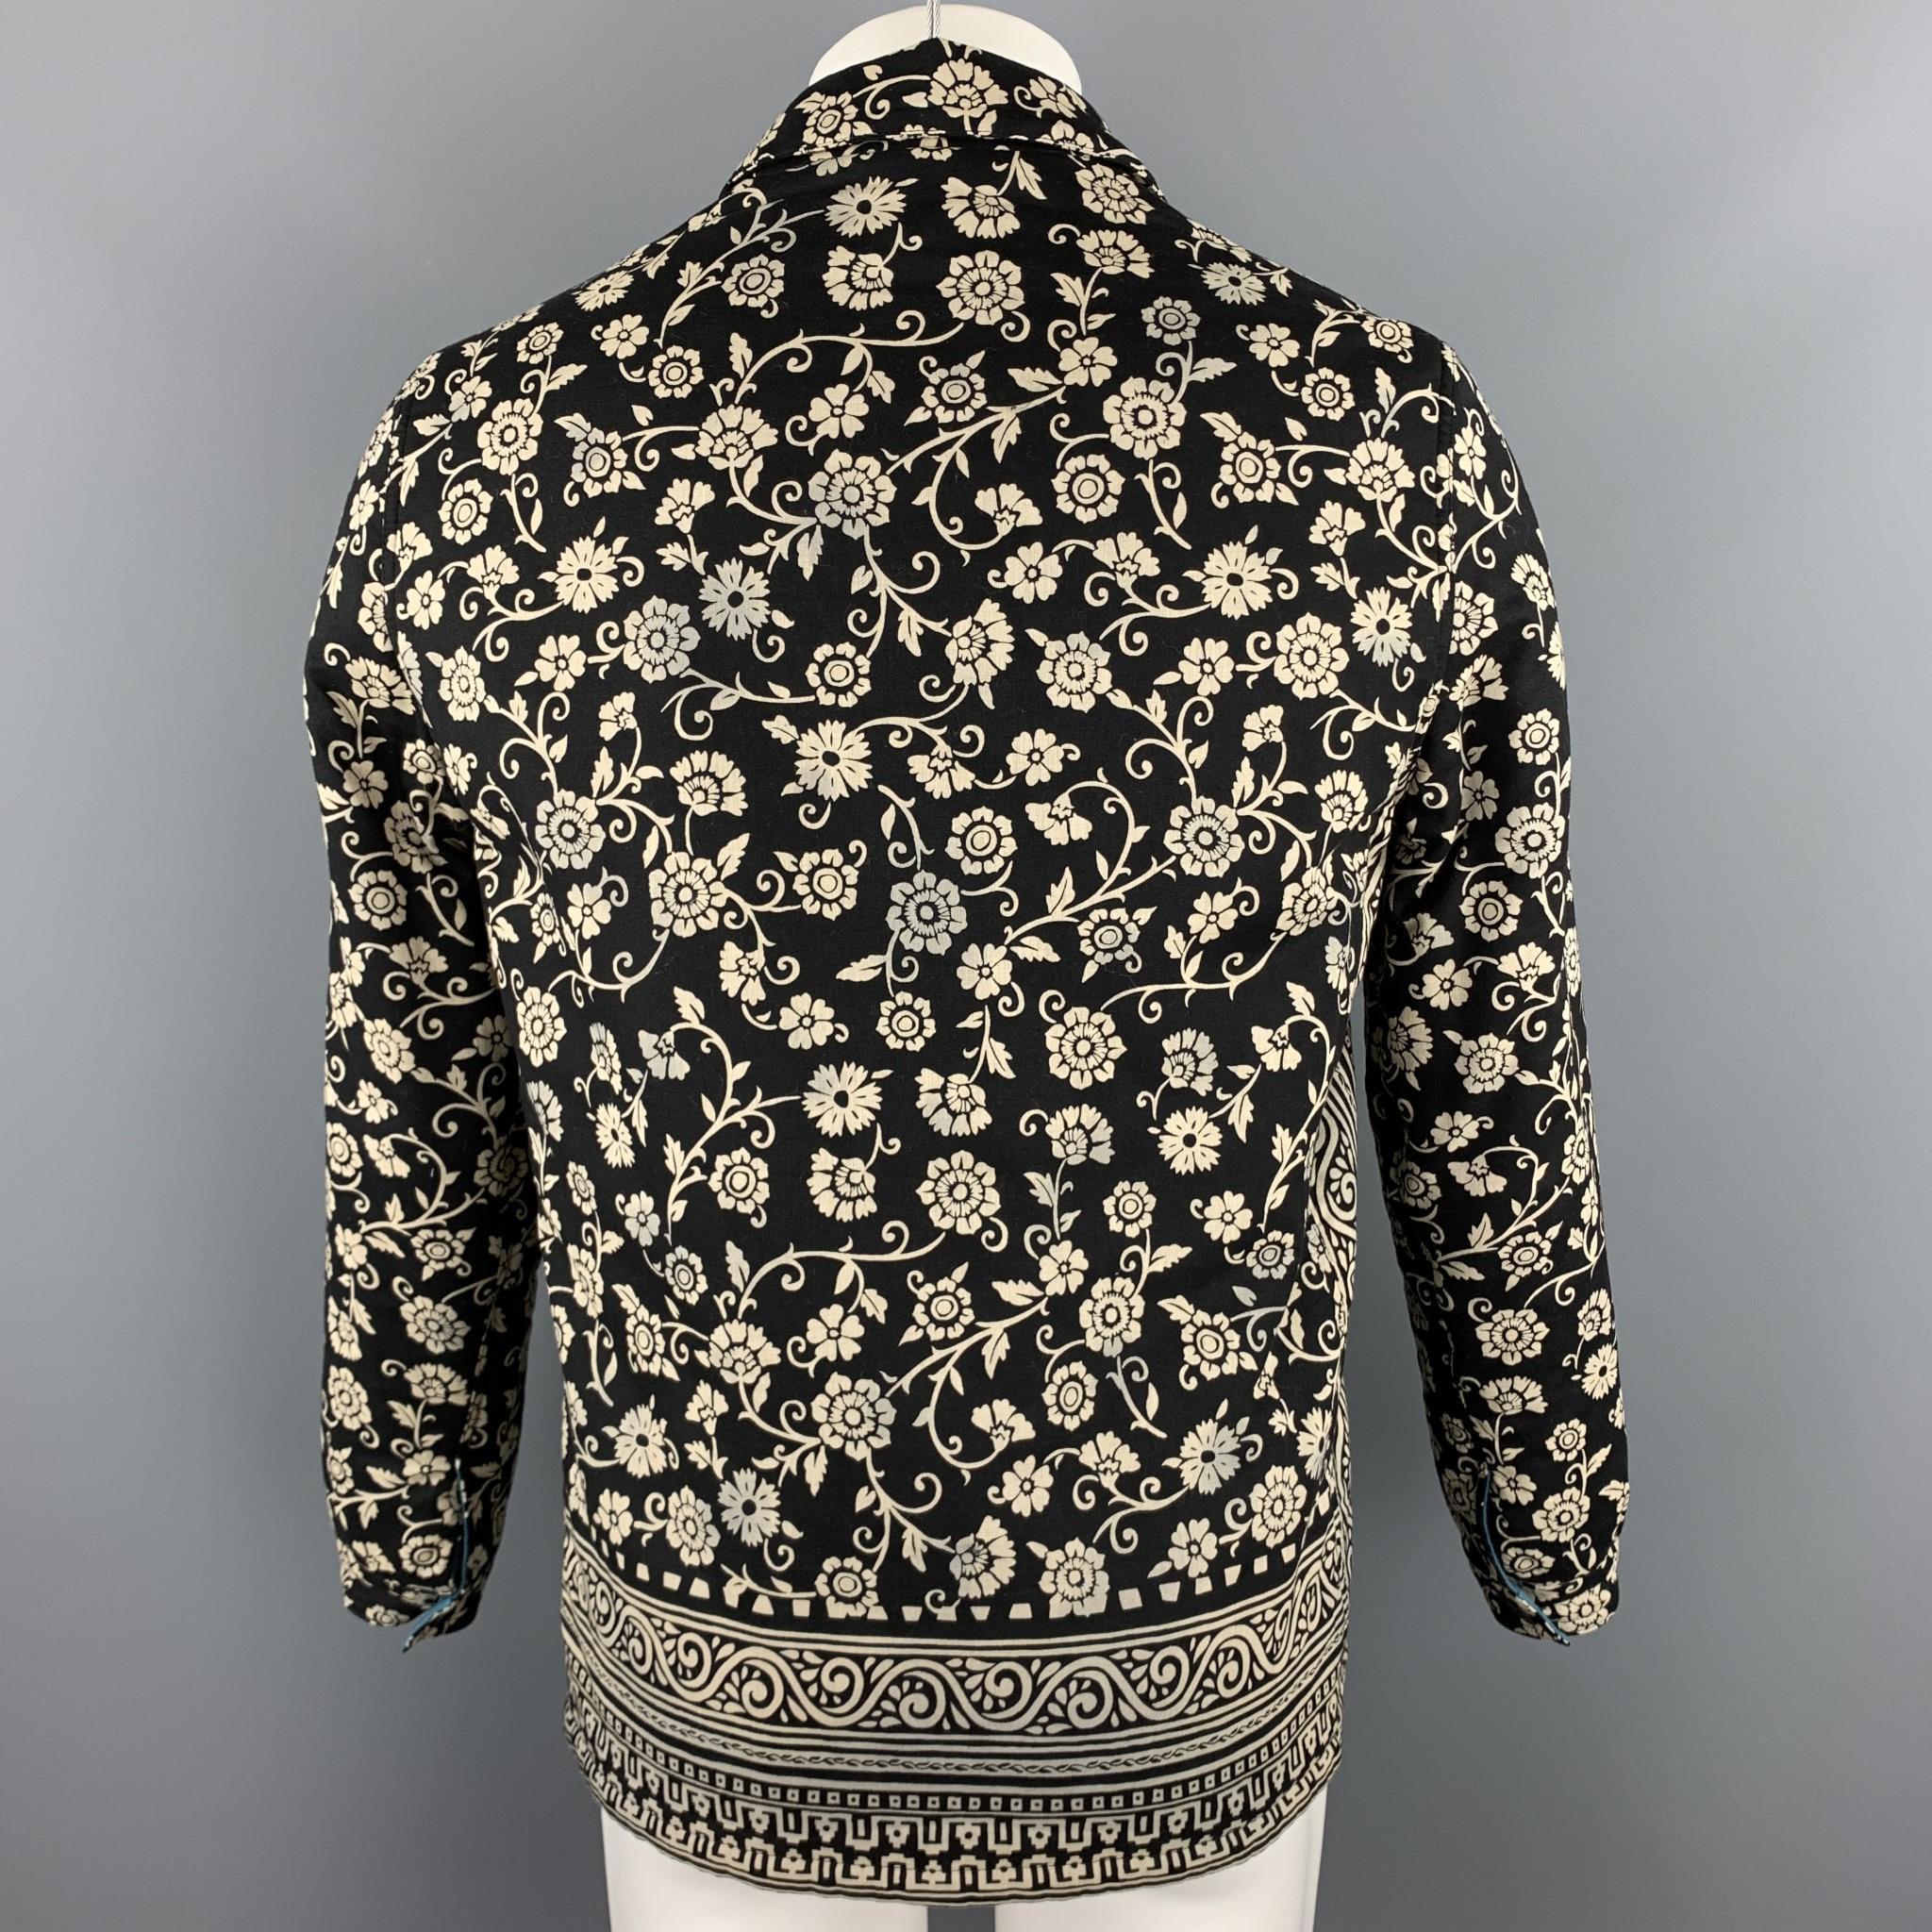 Black BURBERRY PRORSUM Fall 2015 Size 38 Navy & Beige Print Cotton Lined Jacket